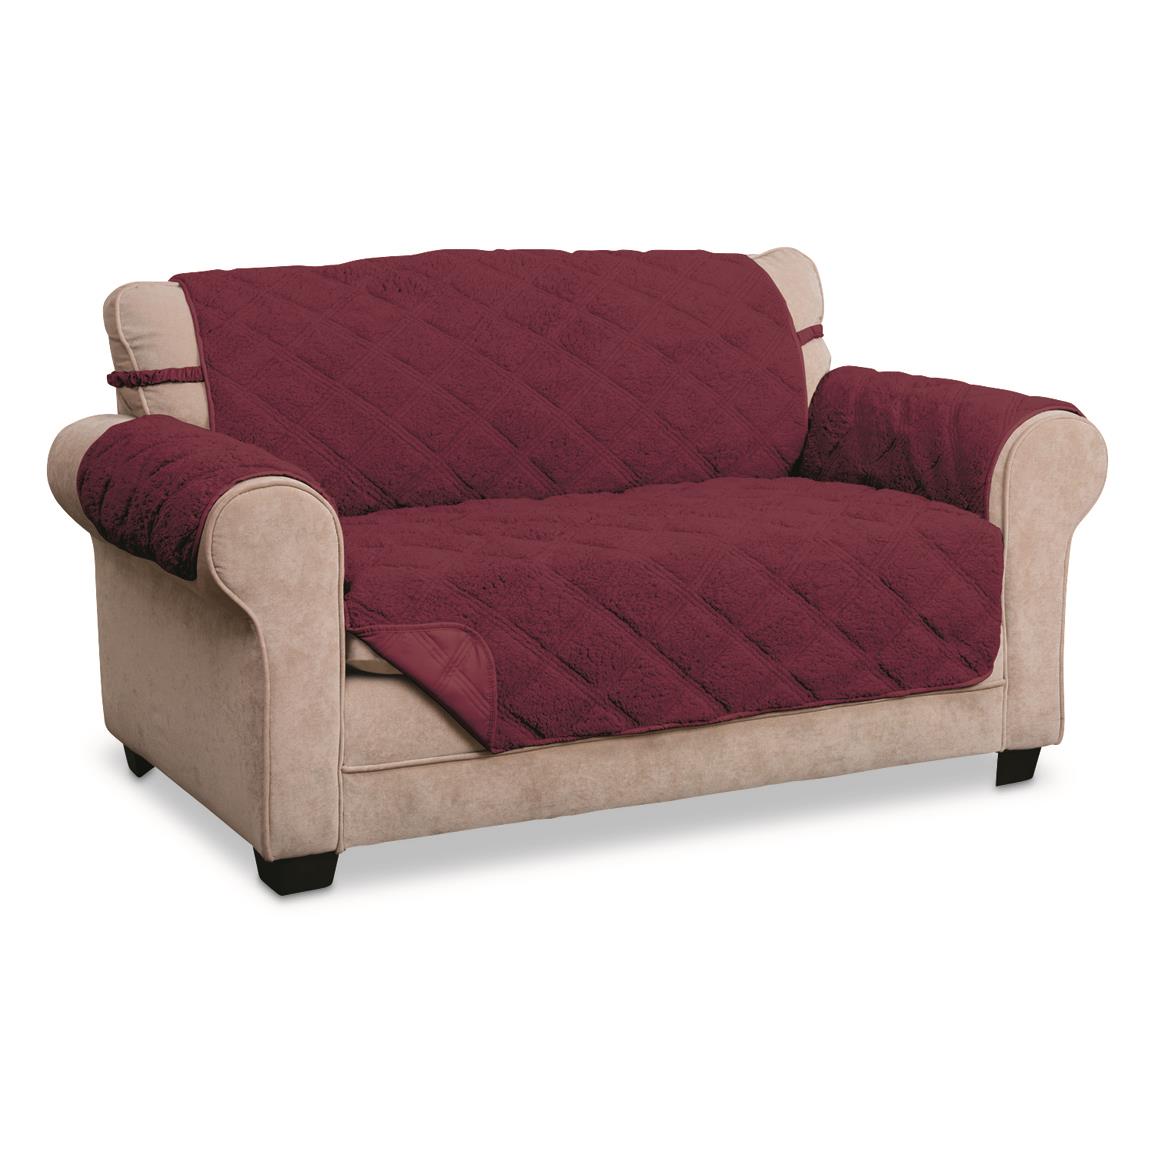 Sofa Cover, Burgundy